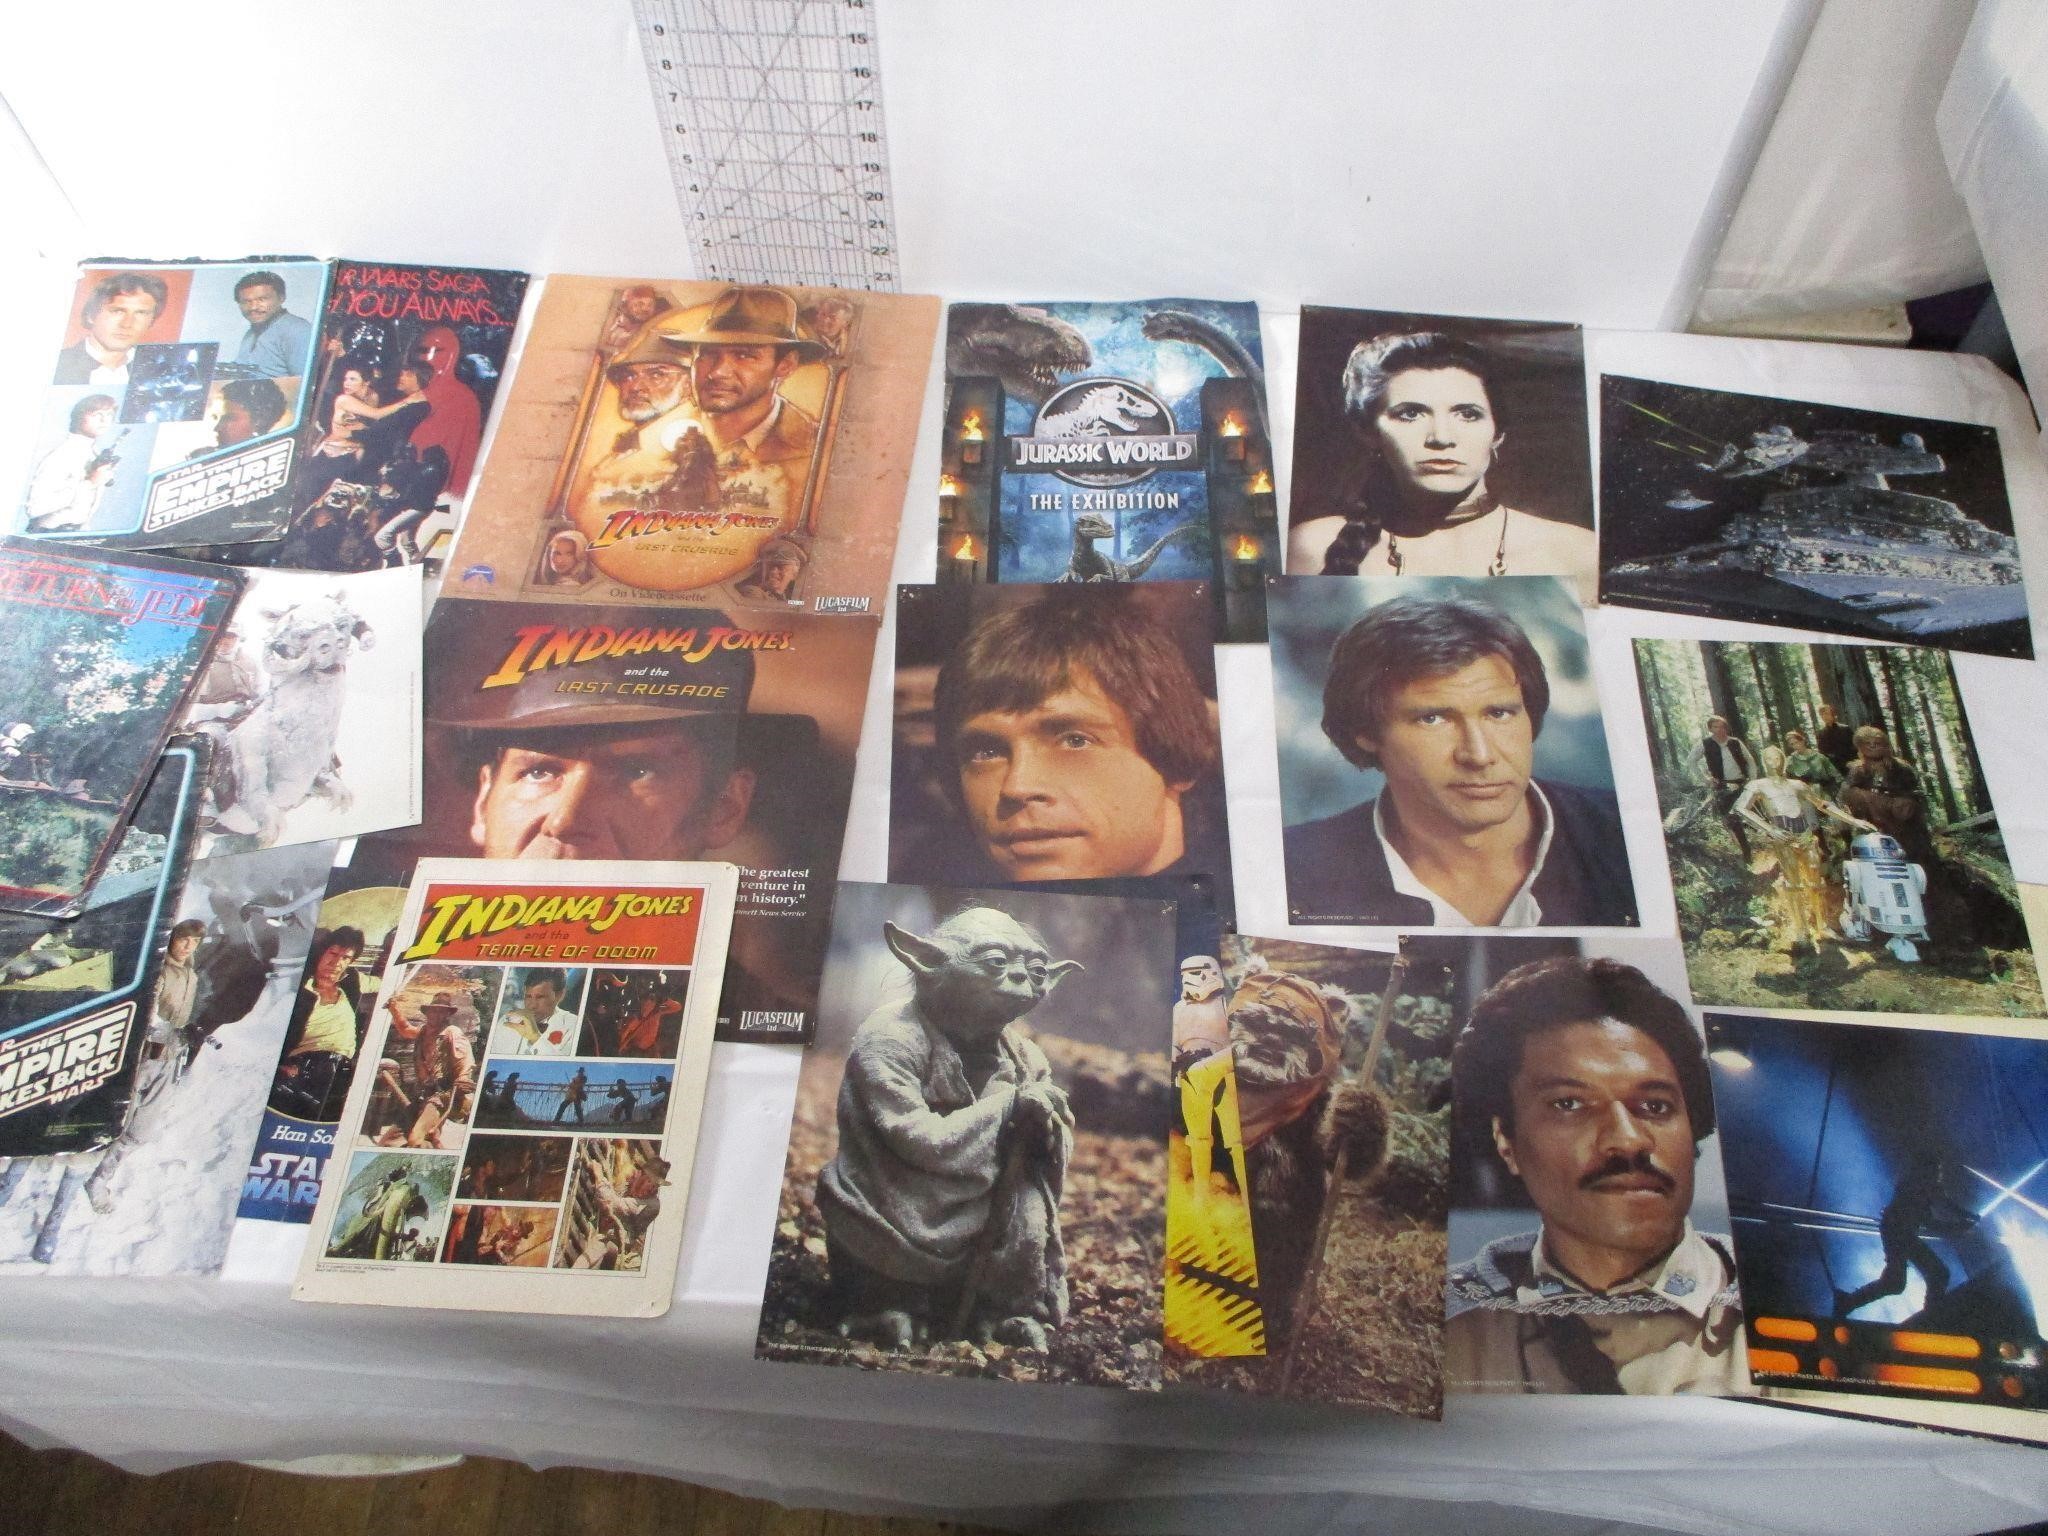 Indiana Jones and Star Wars Photos and Memorabilia